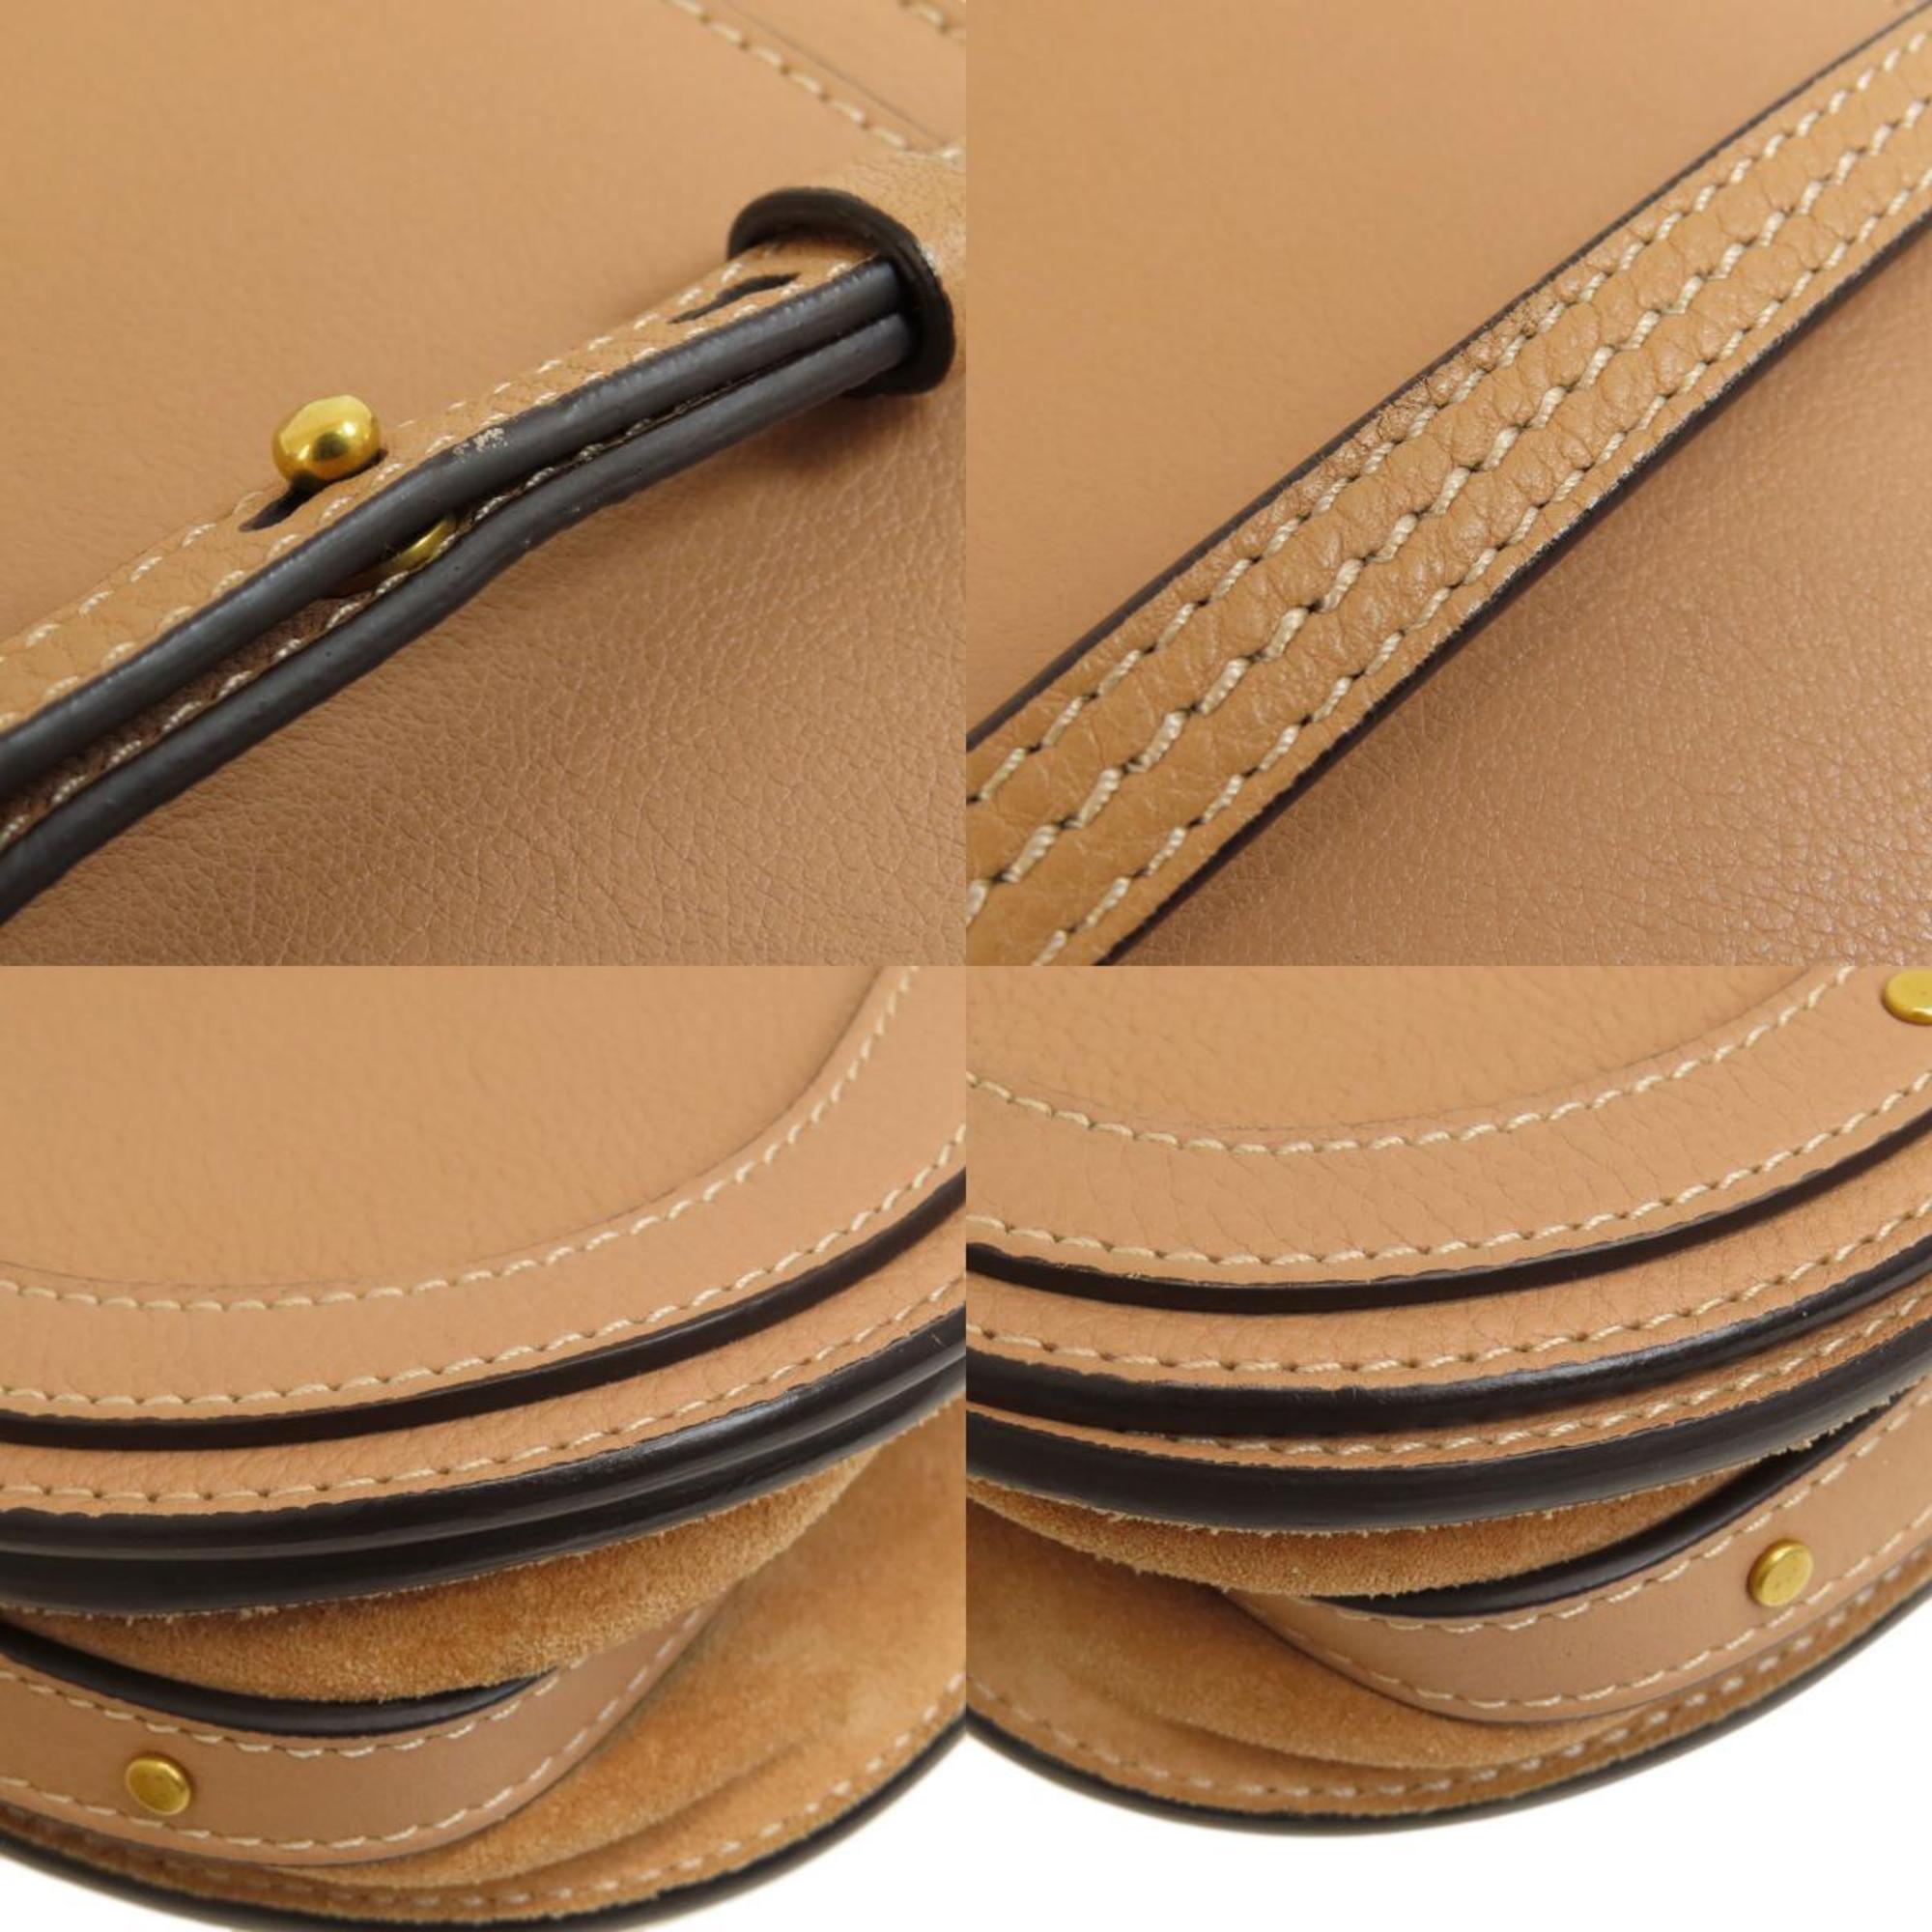 Chloé Chloe Nile Bracelet Bag Handbag Leather Women's